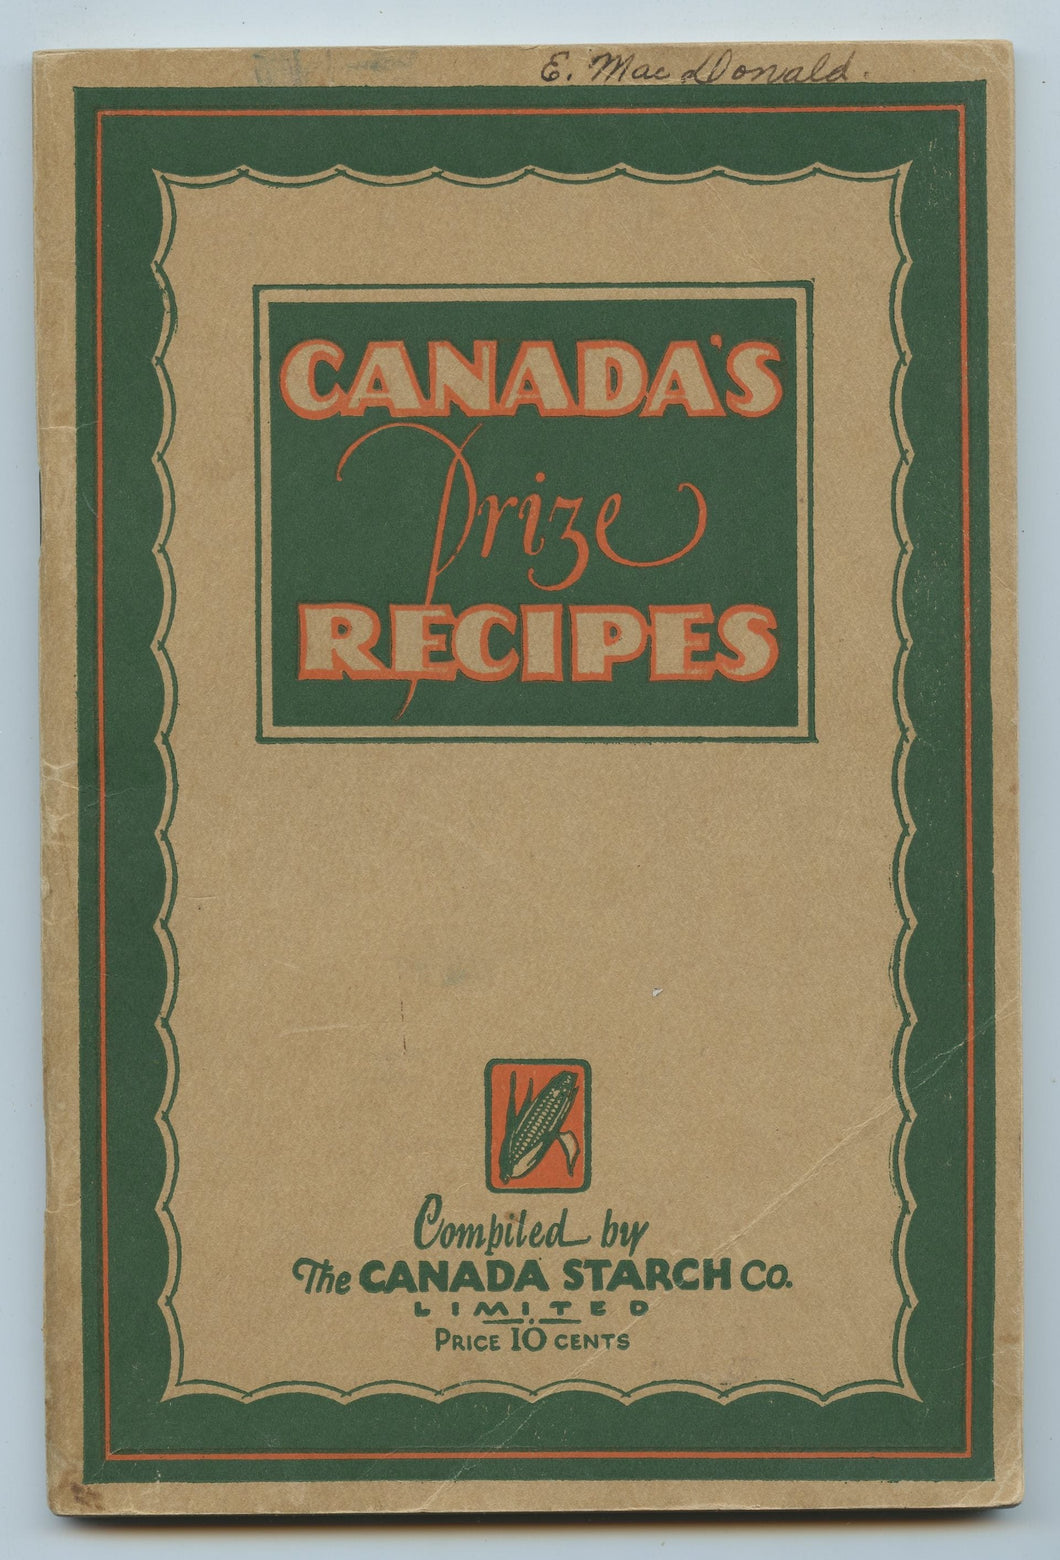 Canada's Prize Recipes